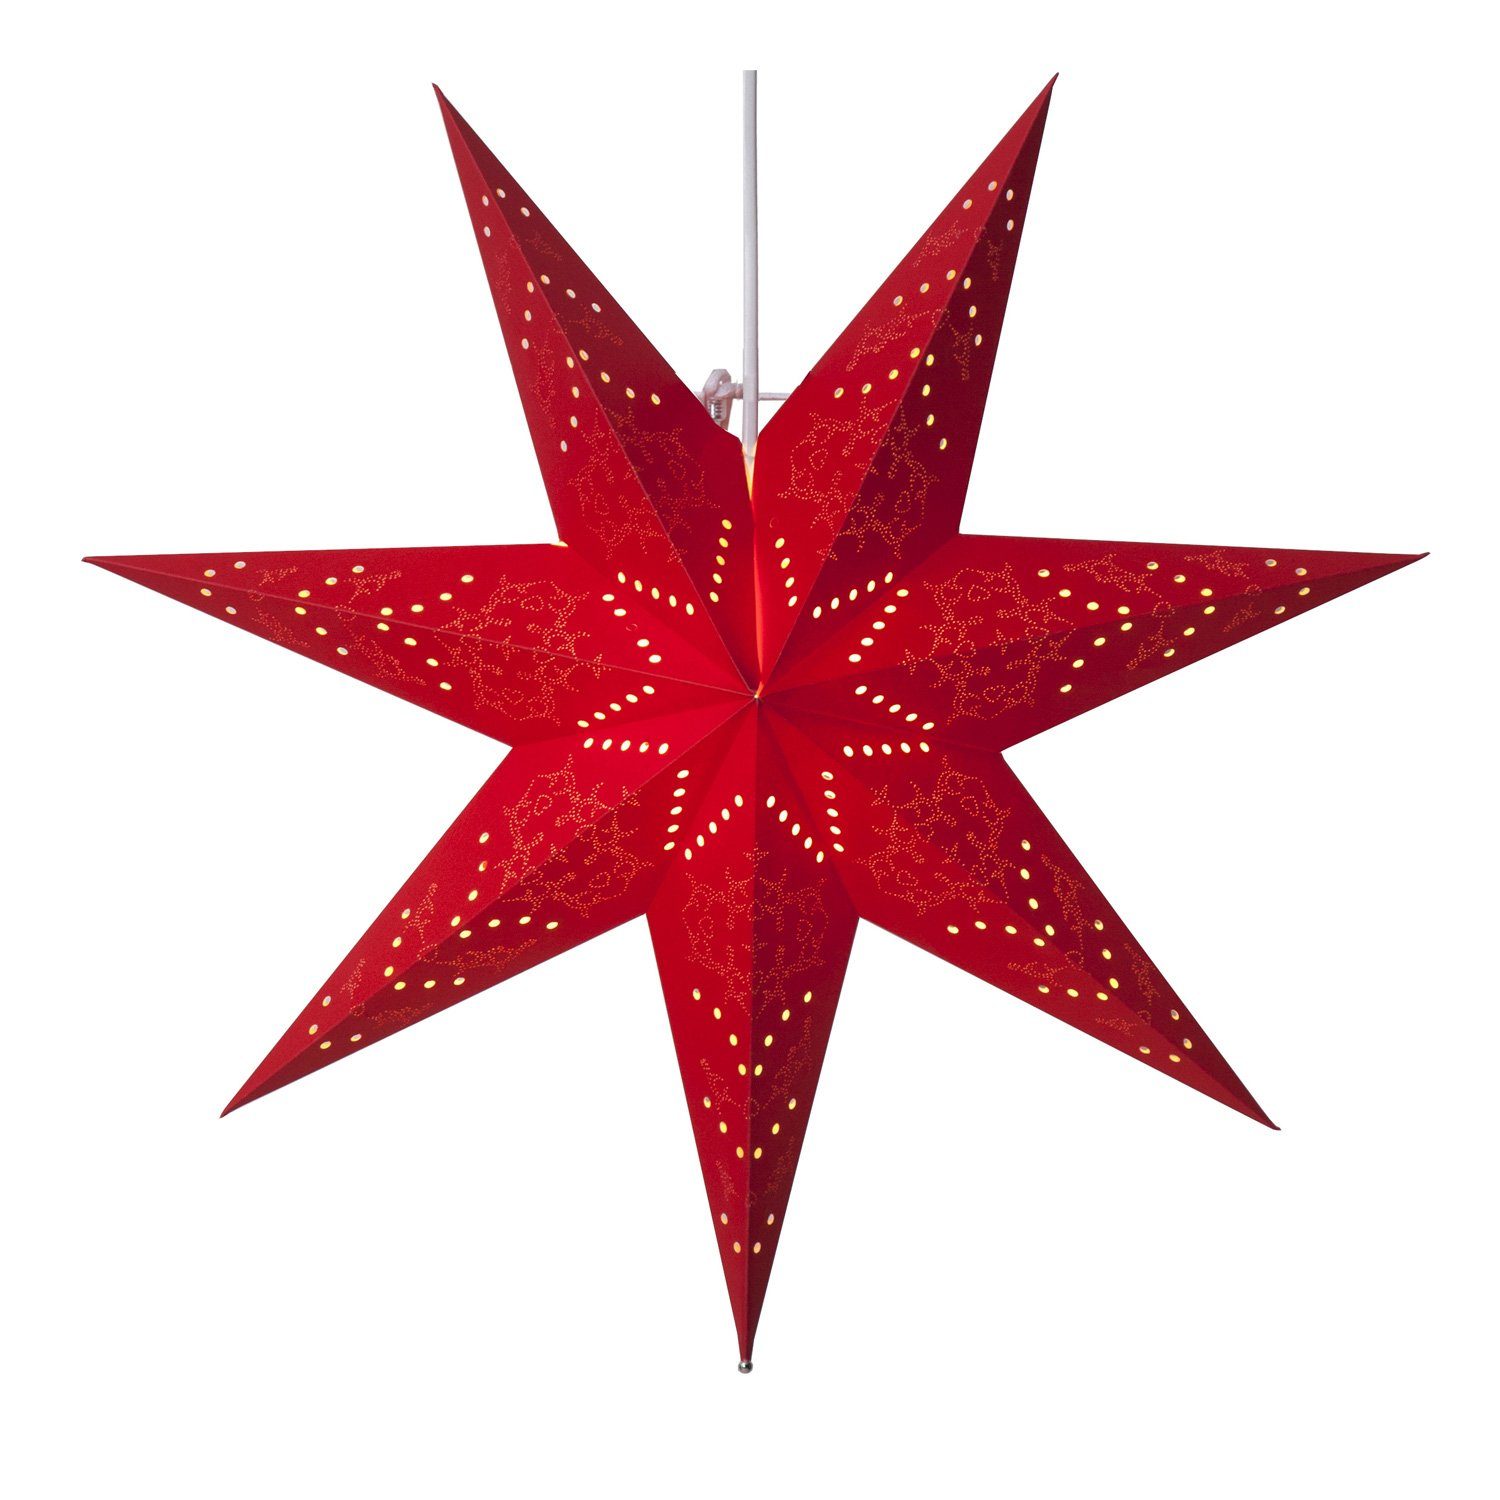 LED 51cm hängend 7-zackig Kabel Papierstern TRADING Stern Leuchtstern Faltstern STAR rot mit